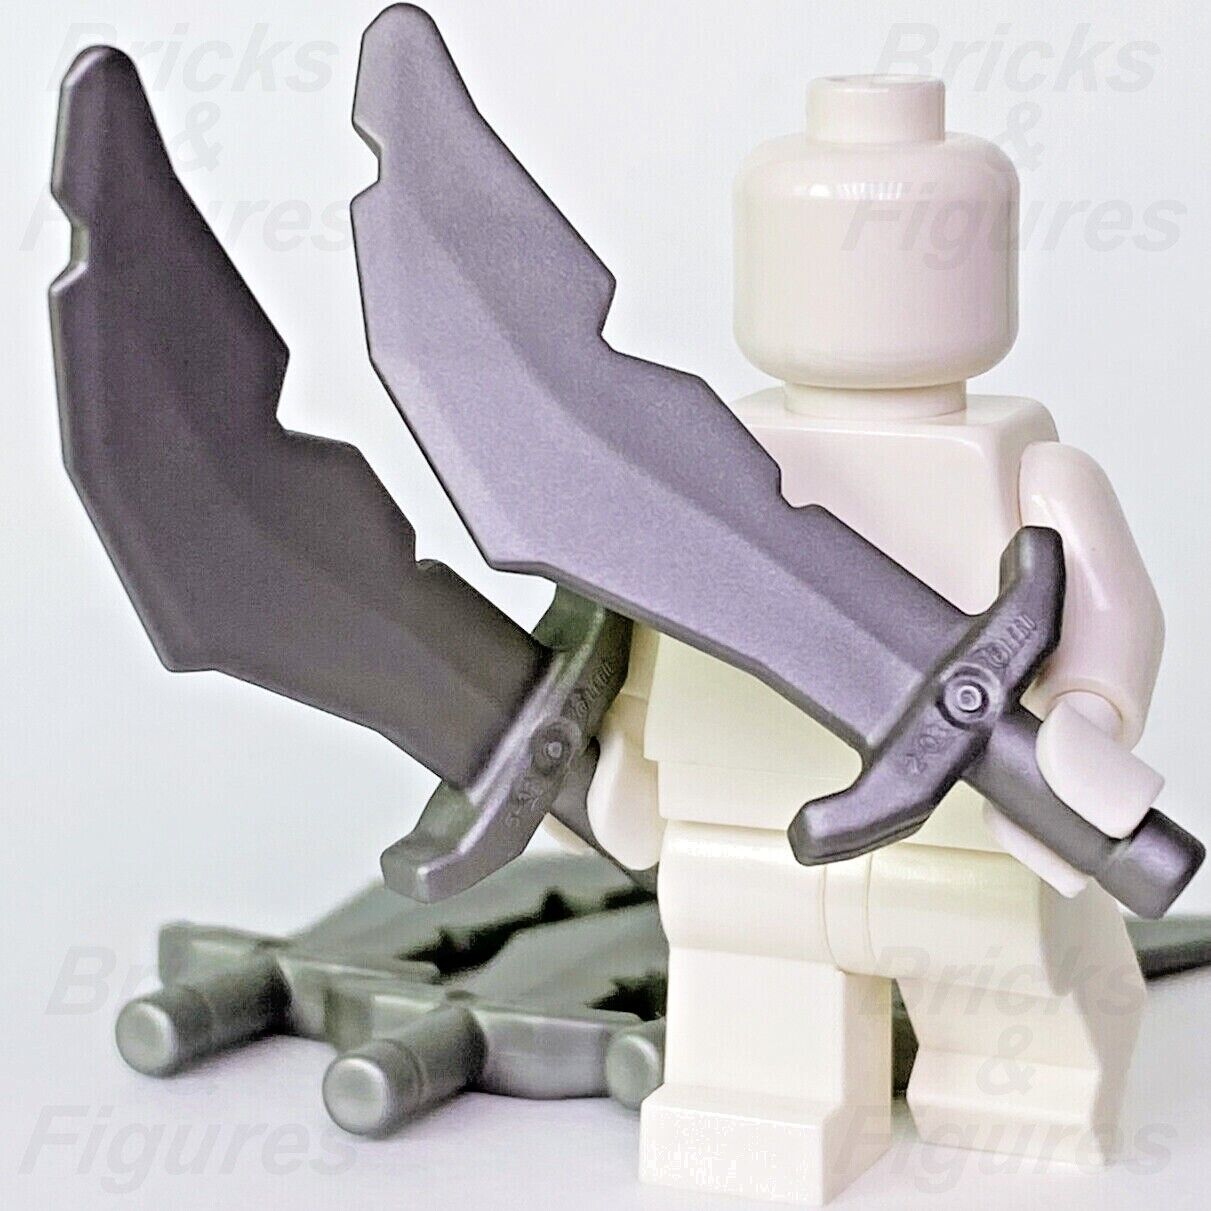 5 x LEGO Flat Silver Scimitar Swords Blades Minifigure Weapon Parts 60752 New - Bricks & Figures